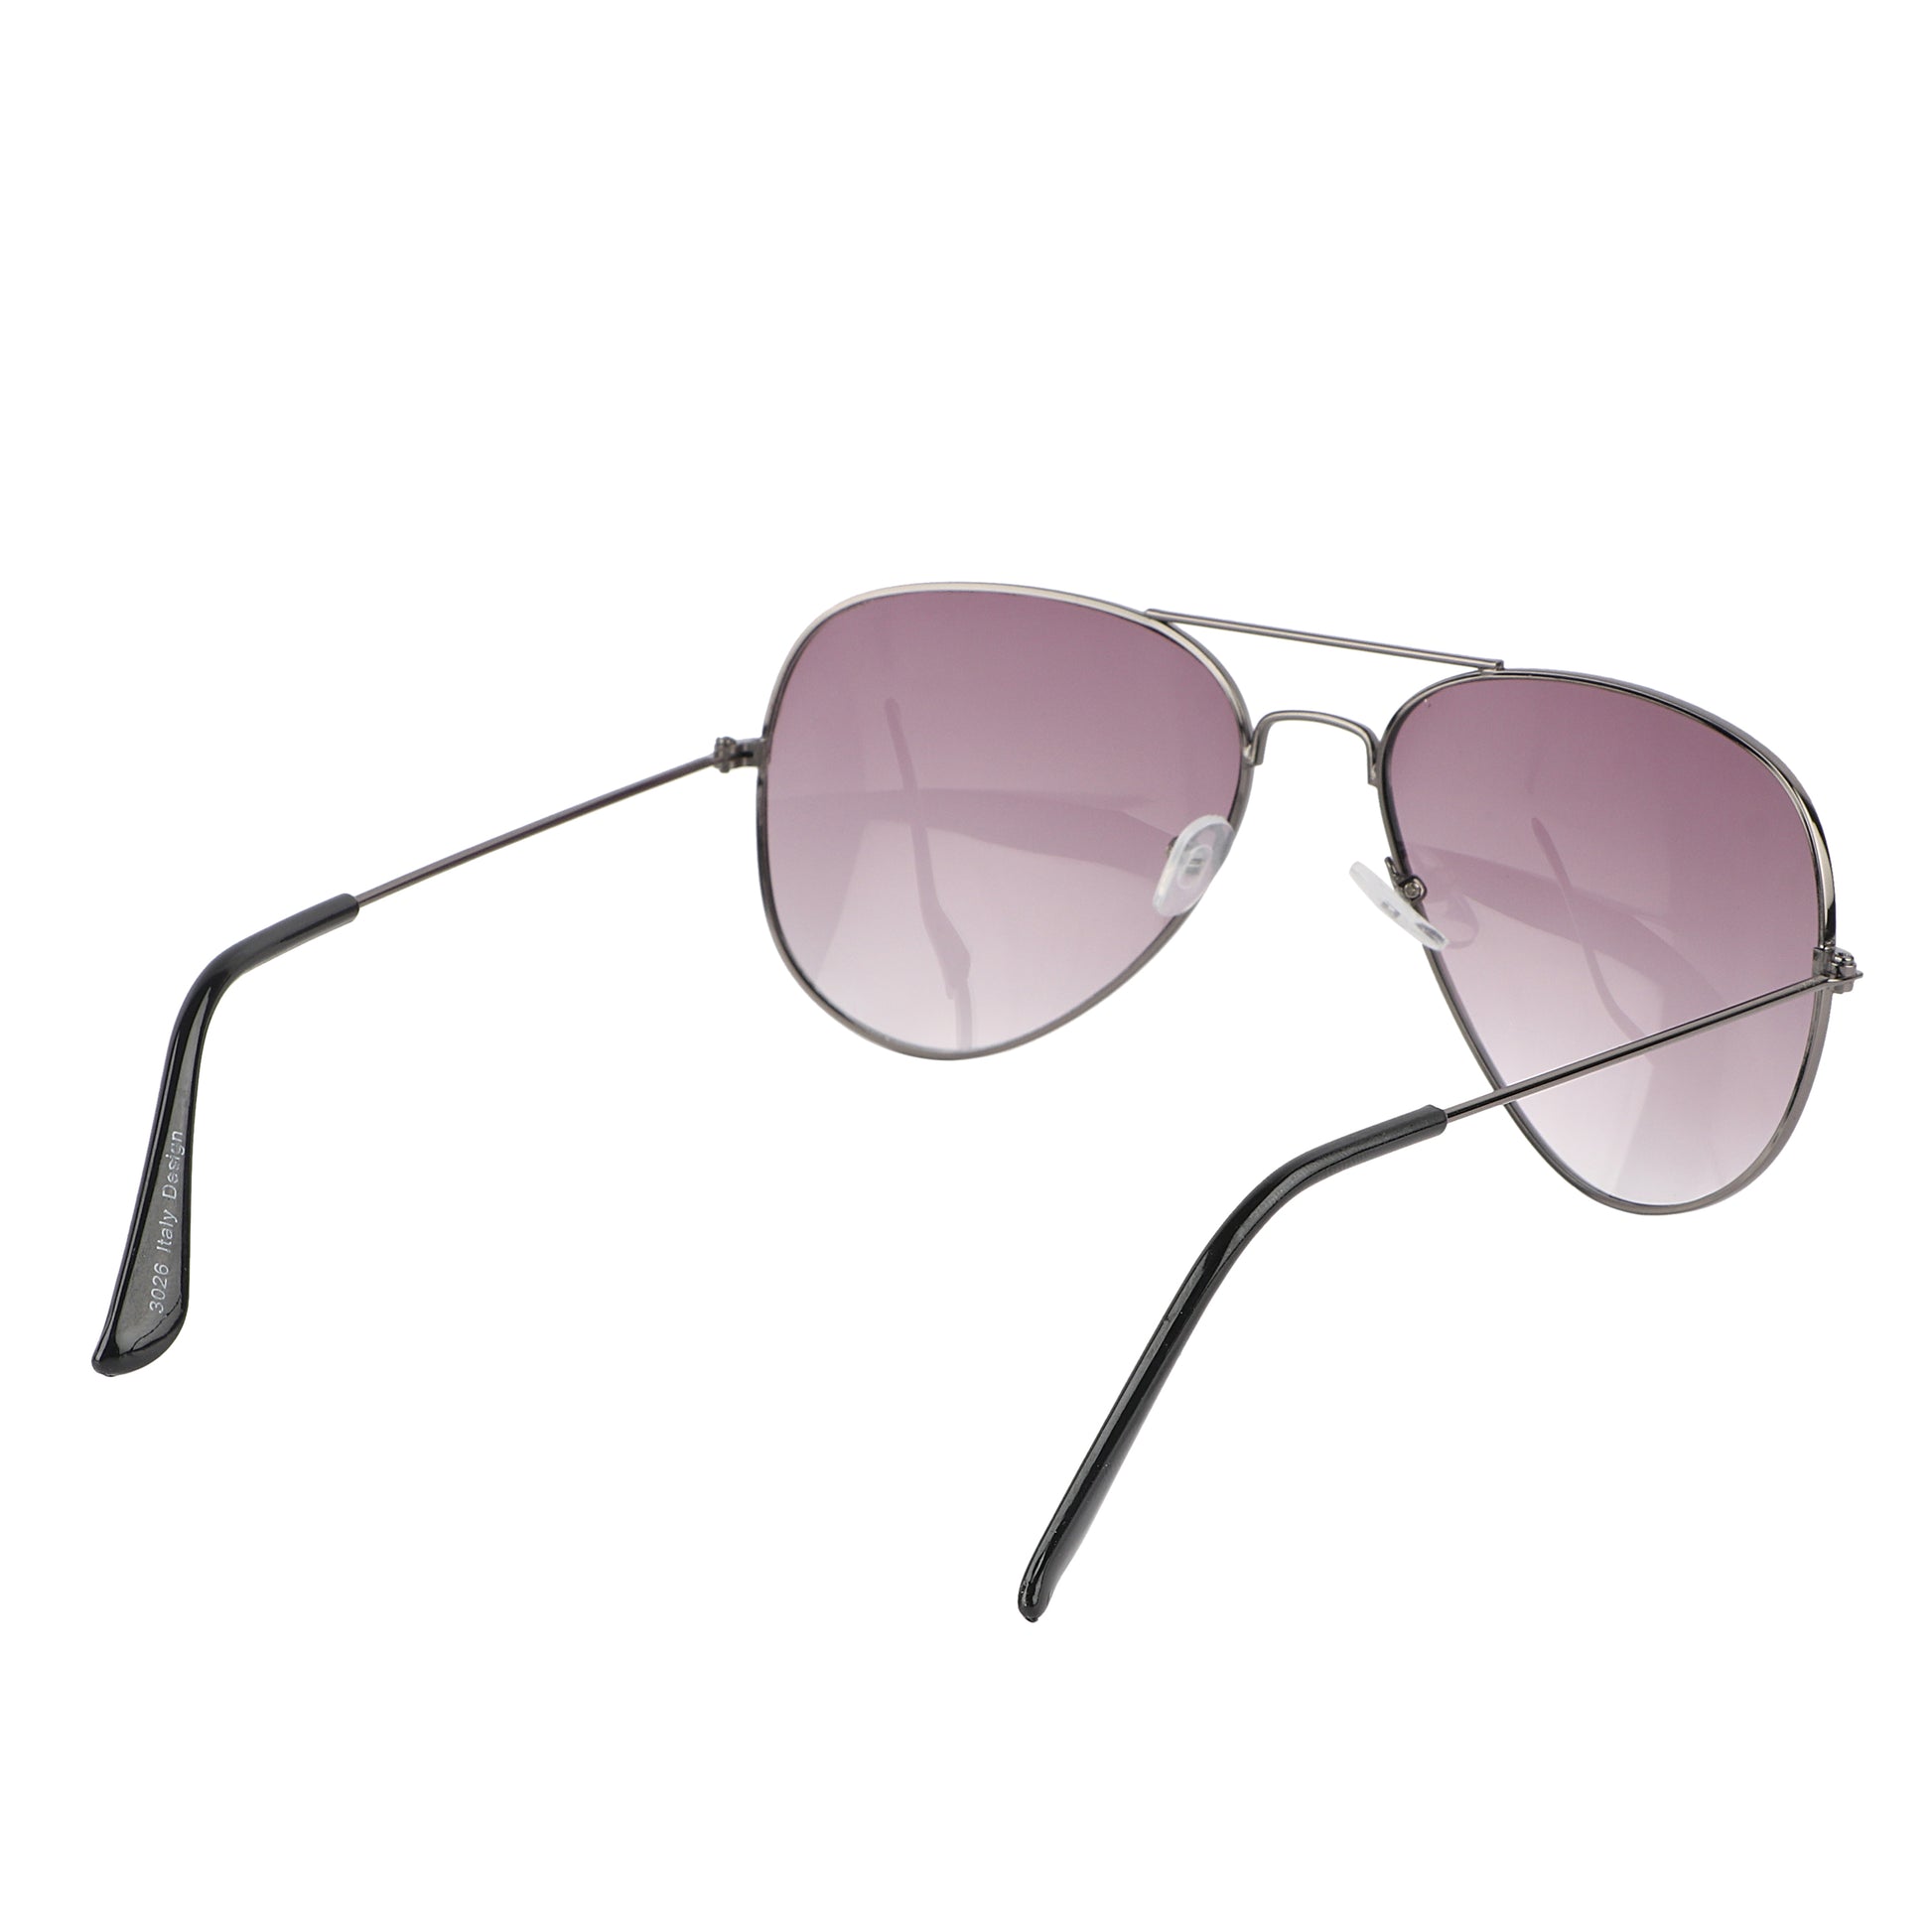 Jodykoes Aviator UV Protection Sunglass (Grey and Purple) - Jodykoes ®